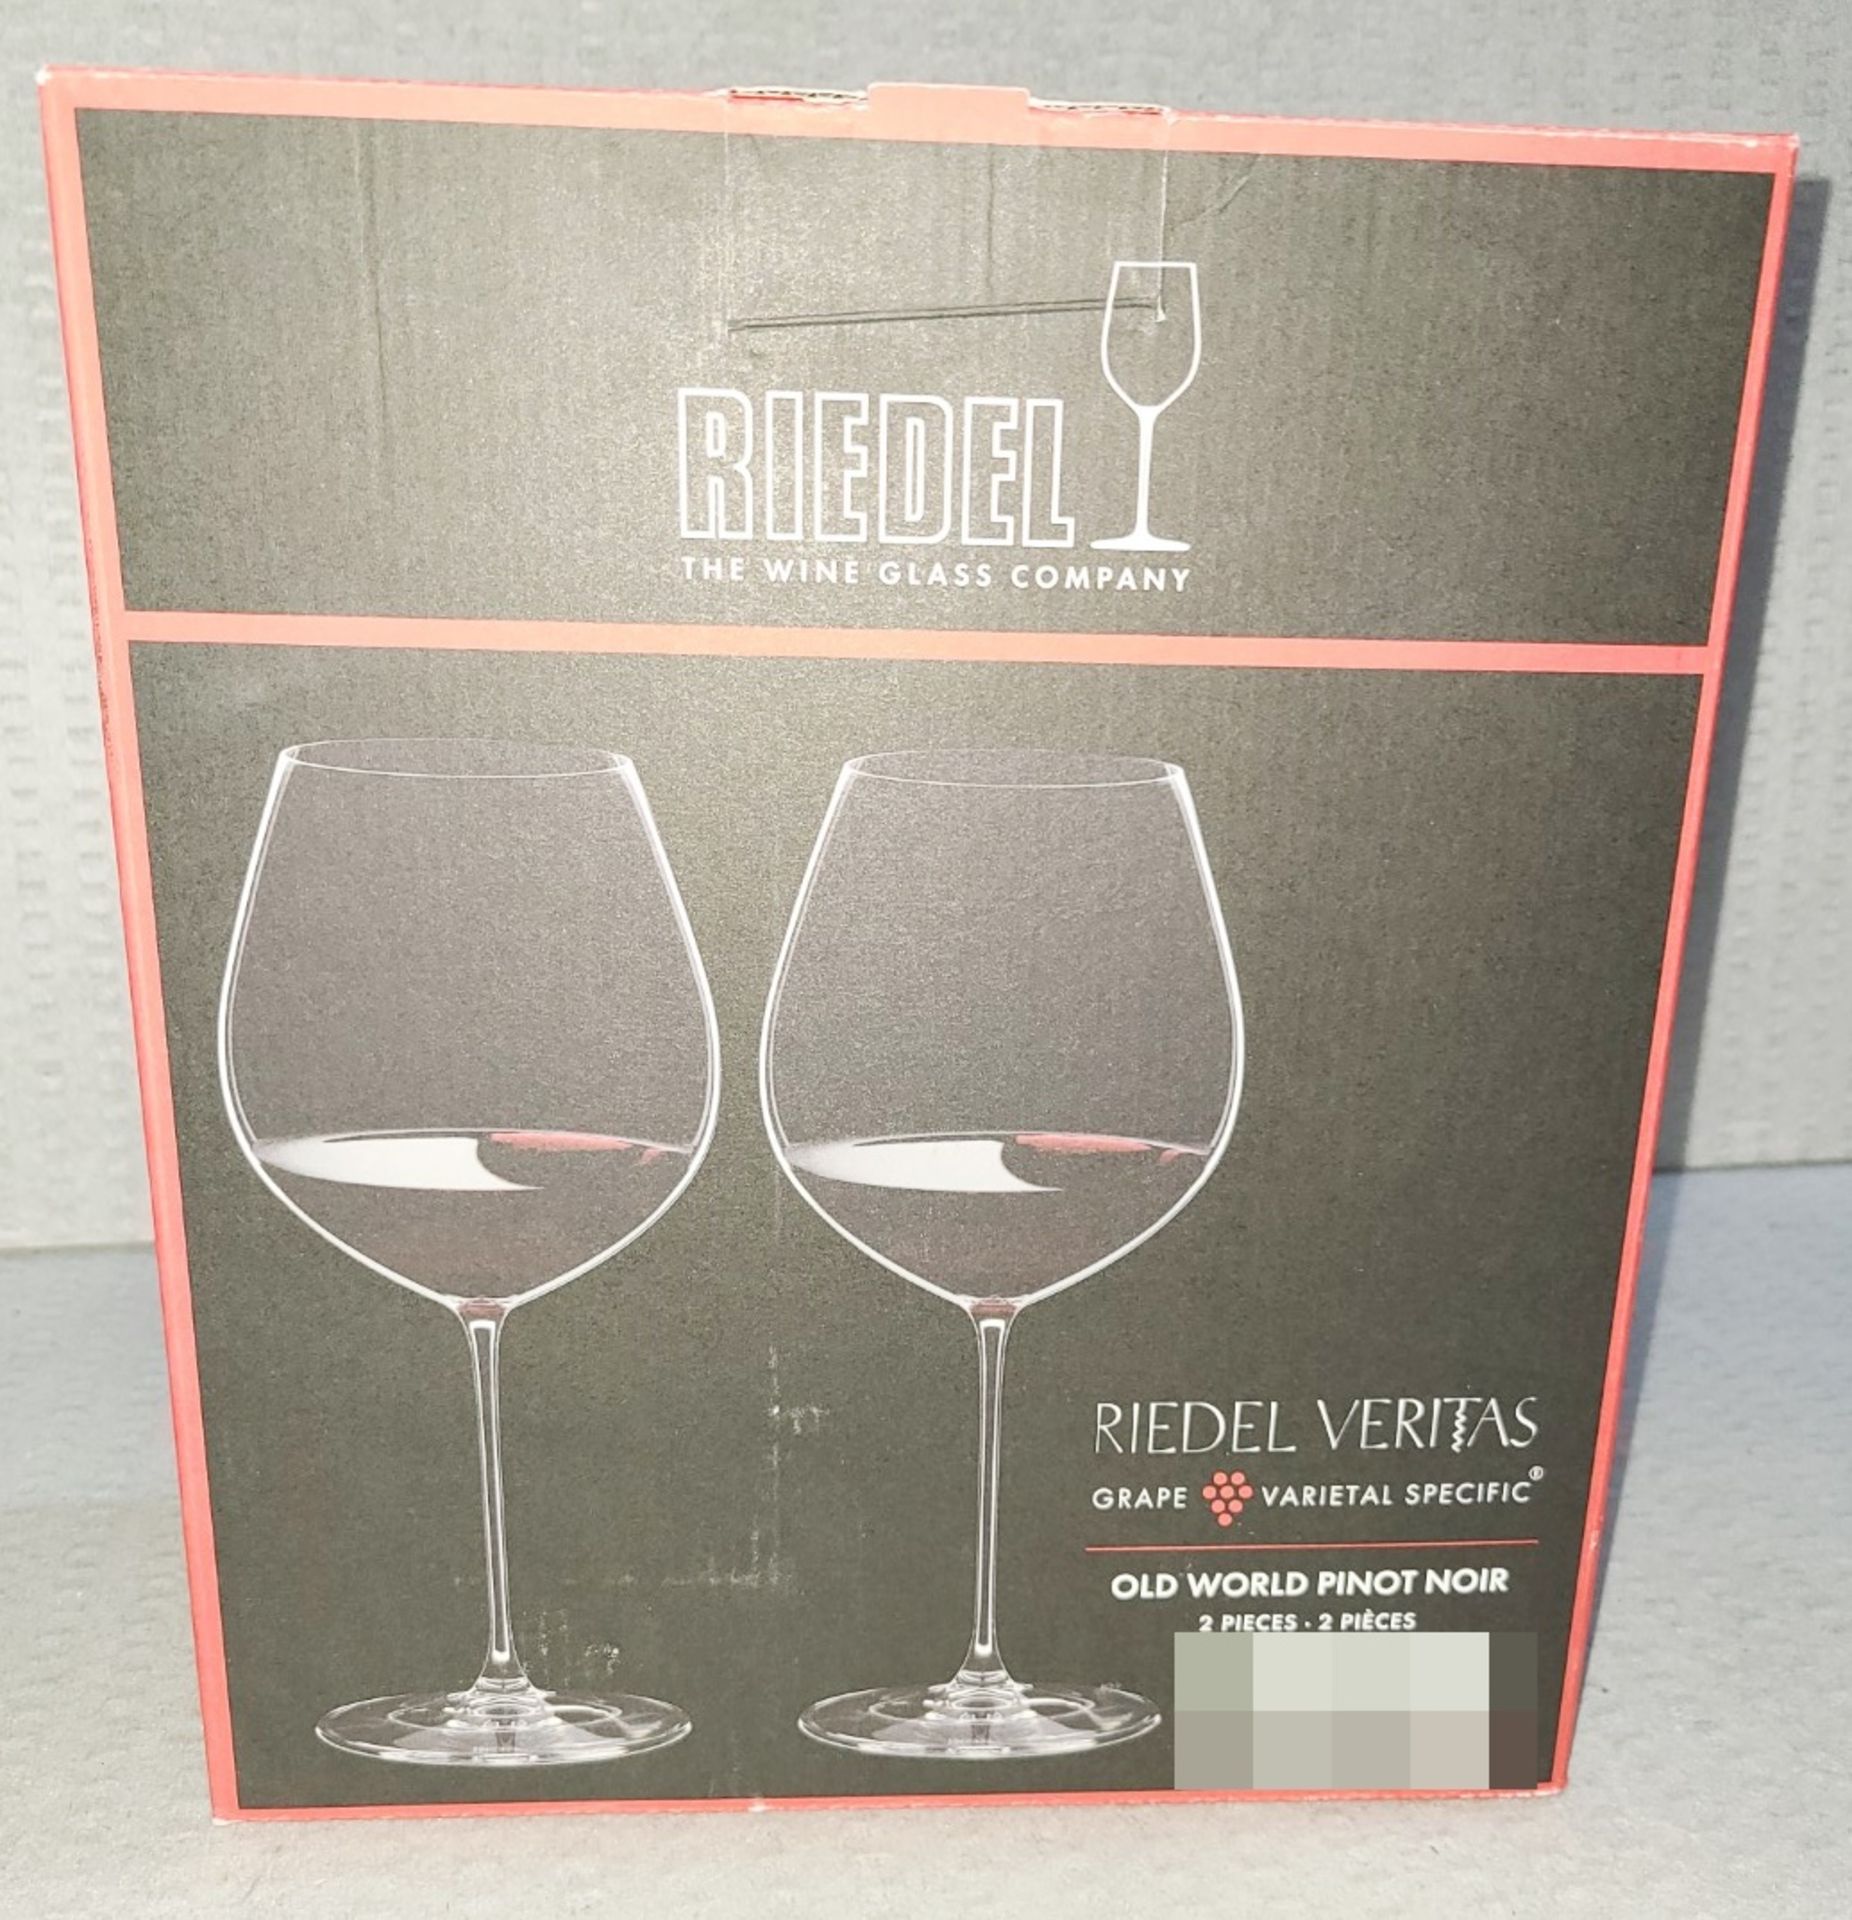 1 x Riedel 'Veritas Old World' Pinot Noir Wine Glass - Original Price £62.00 - Image 3 of 4